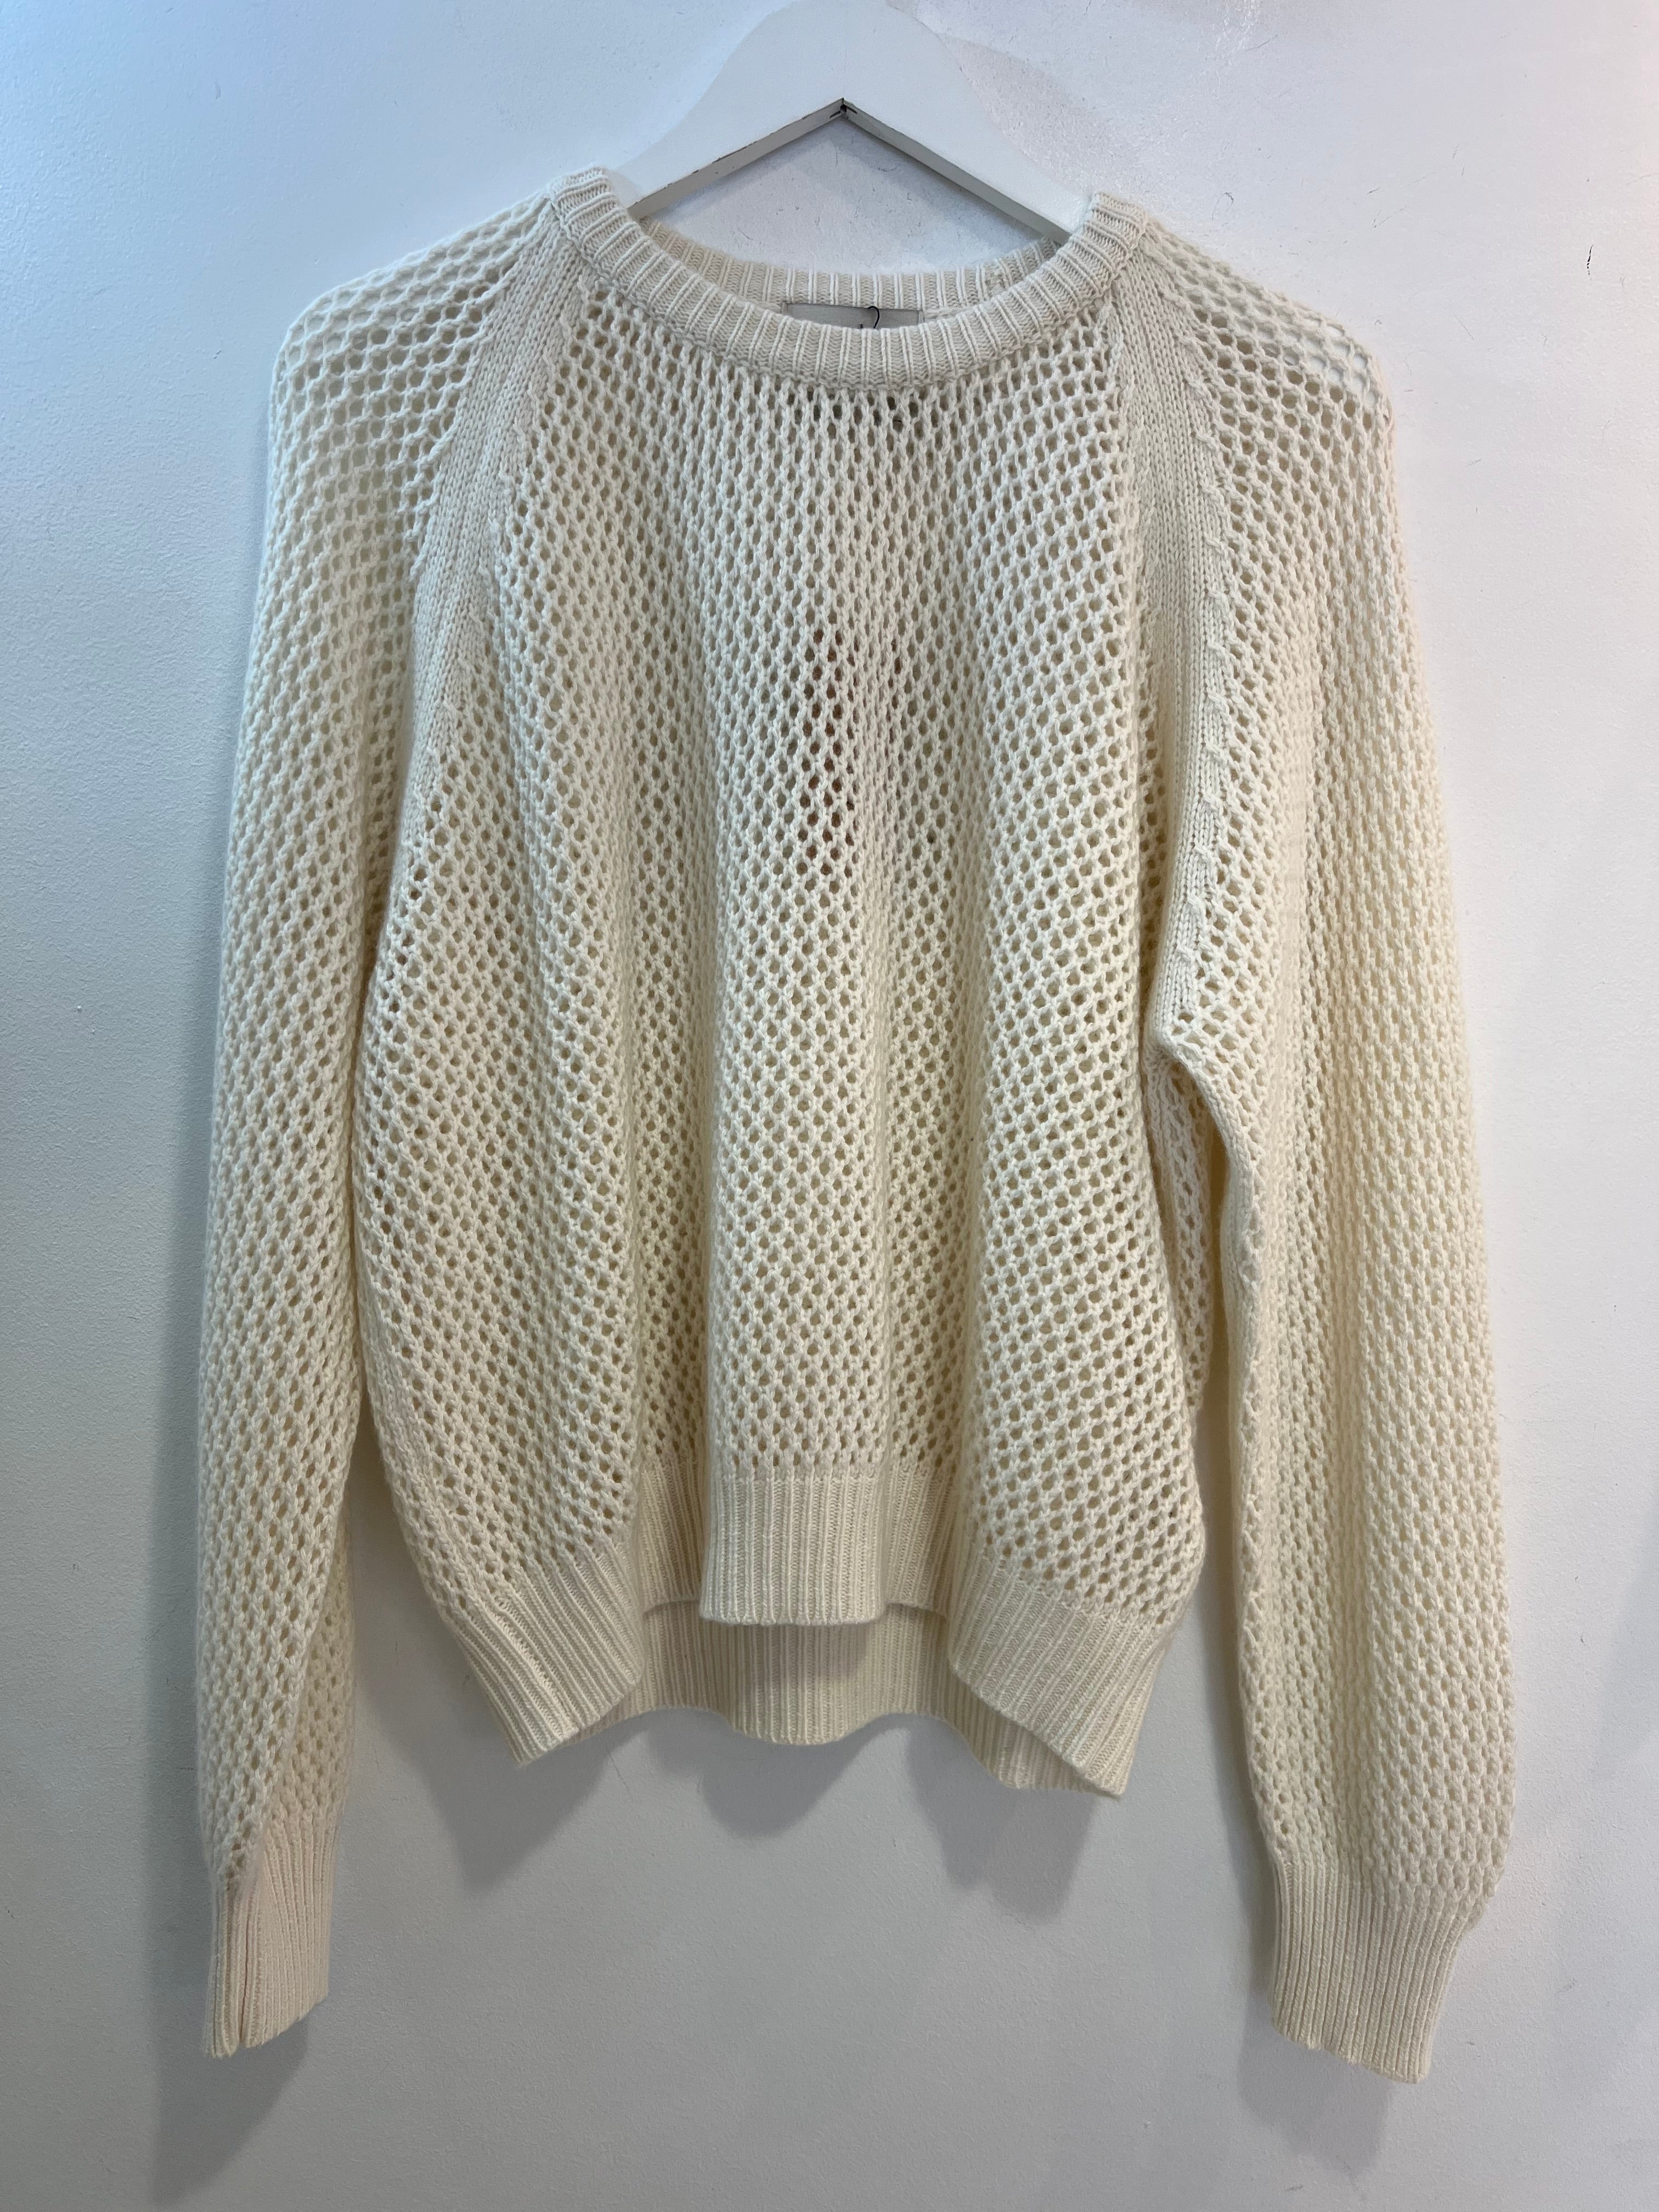 Hetre Alresford Hampshire clothes store n.o.w White Crochet Ragland Sleeve Sweater